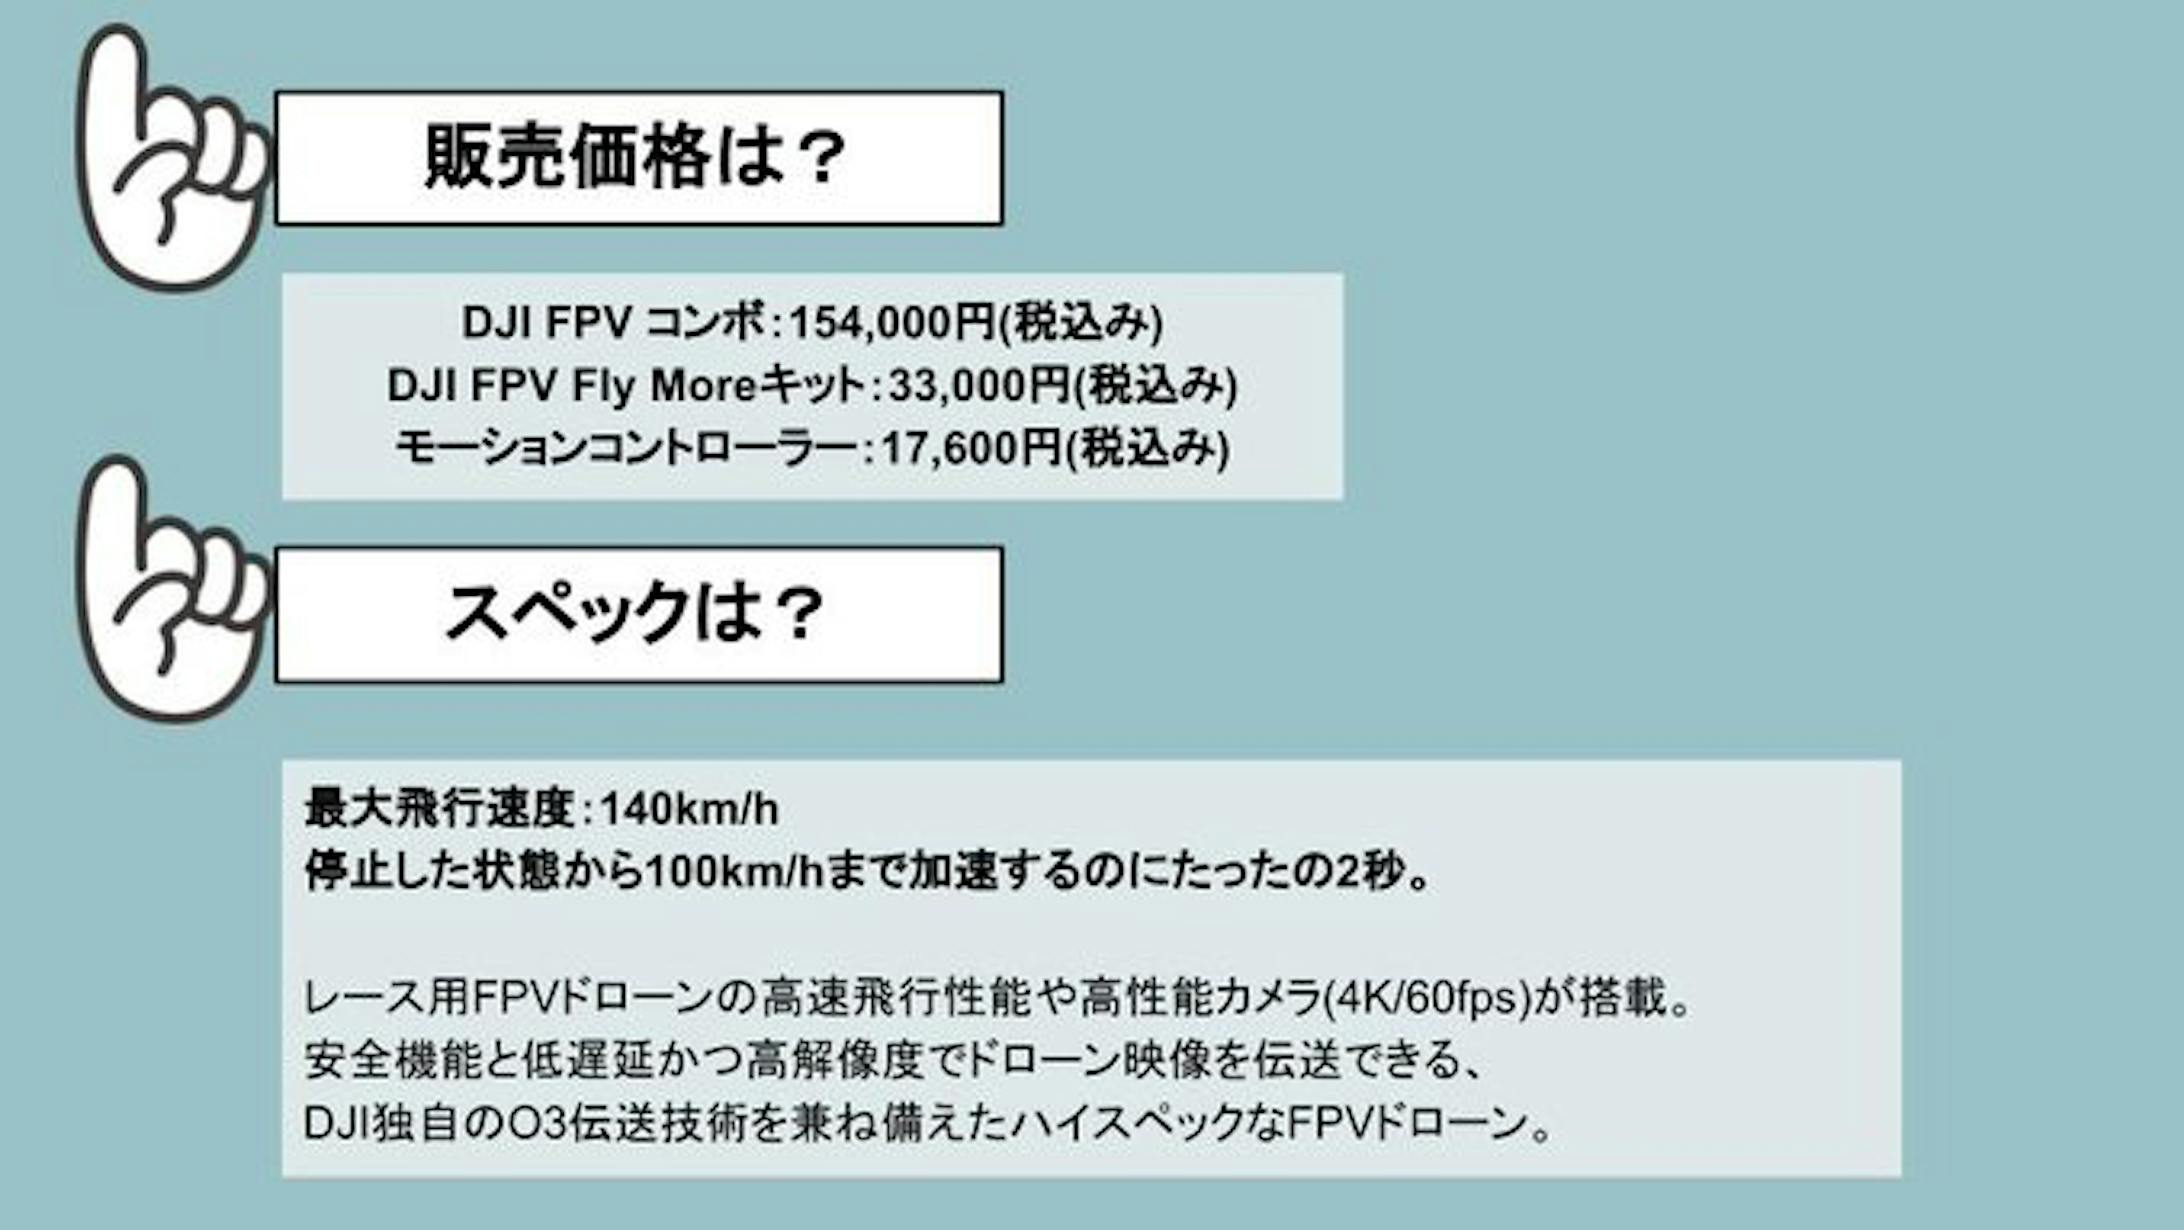 【SNS用画像】DJI FPV-4